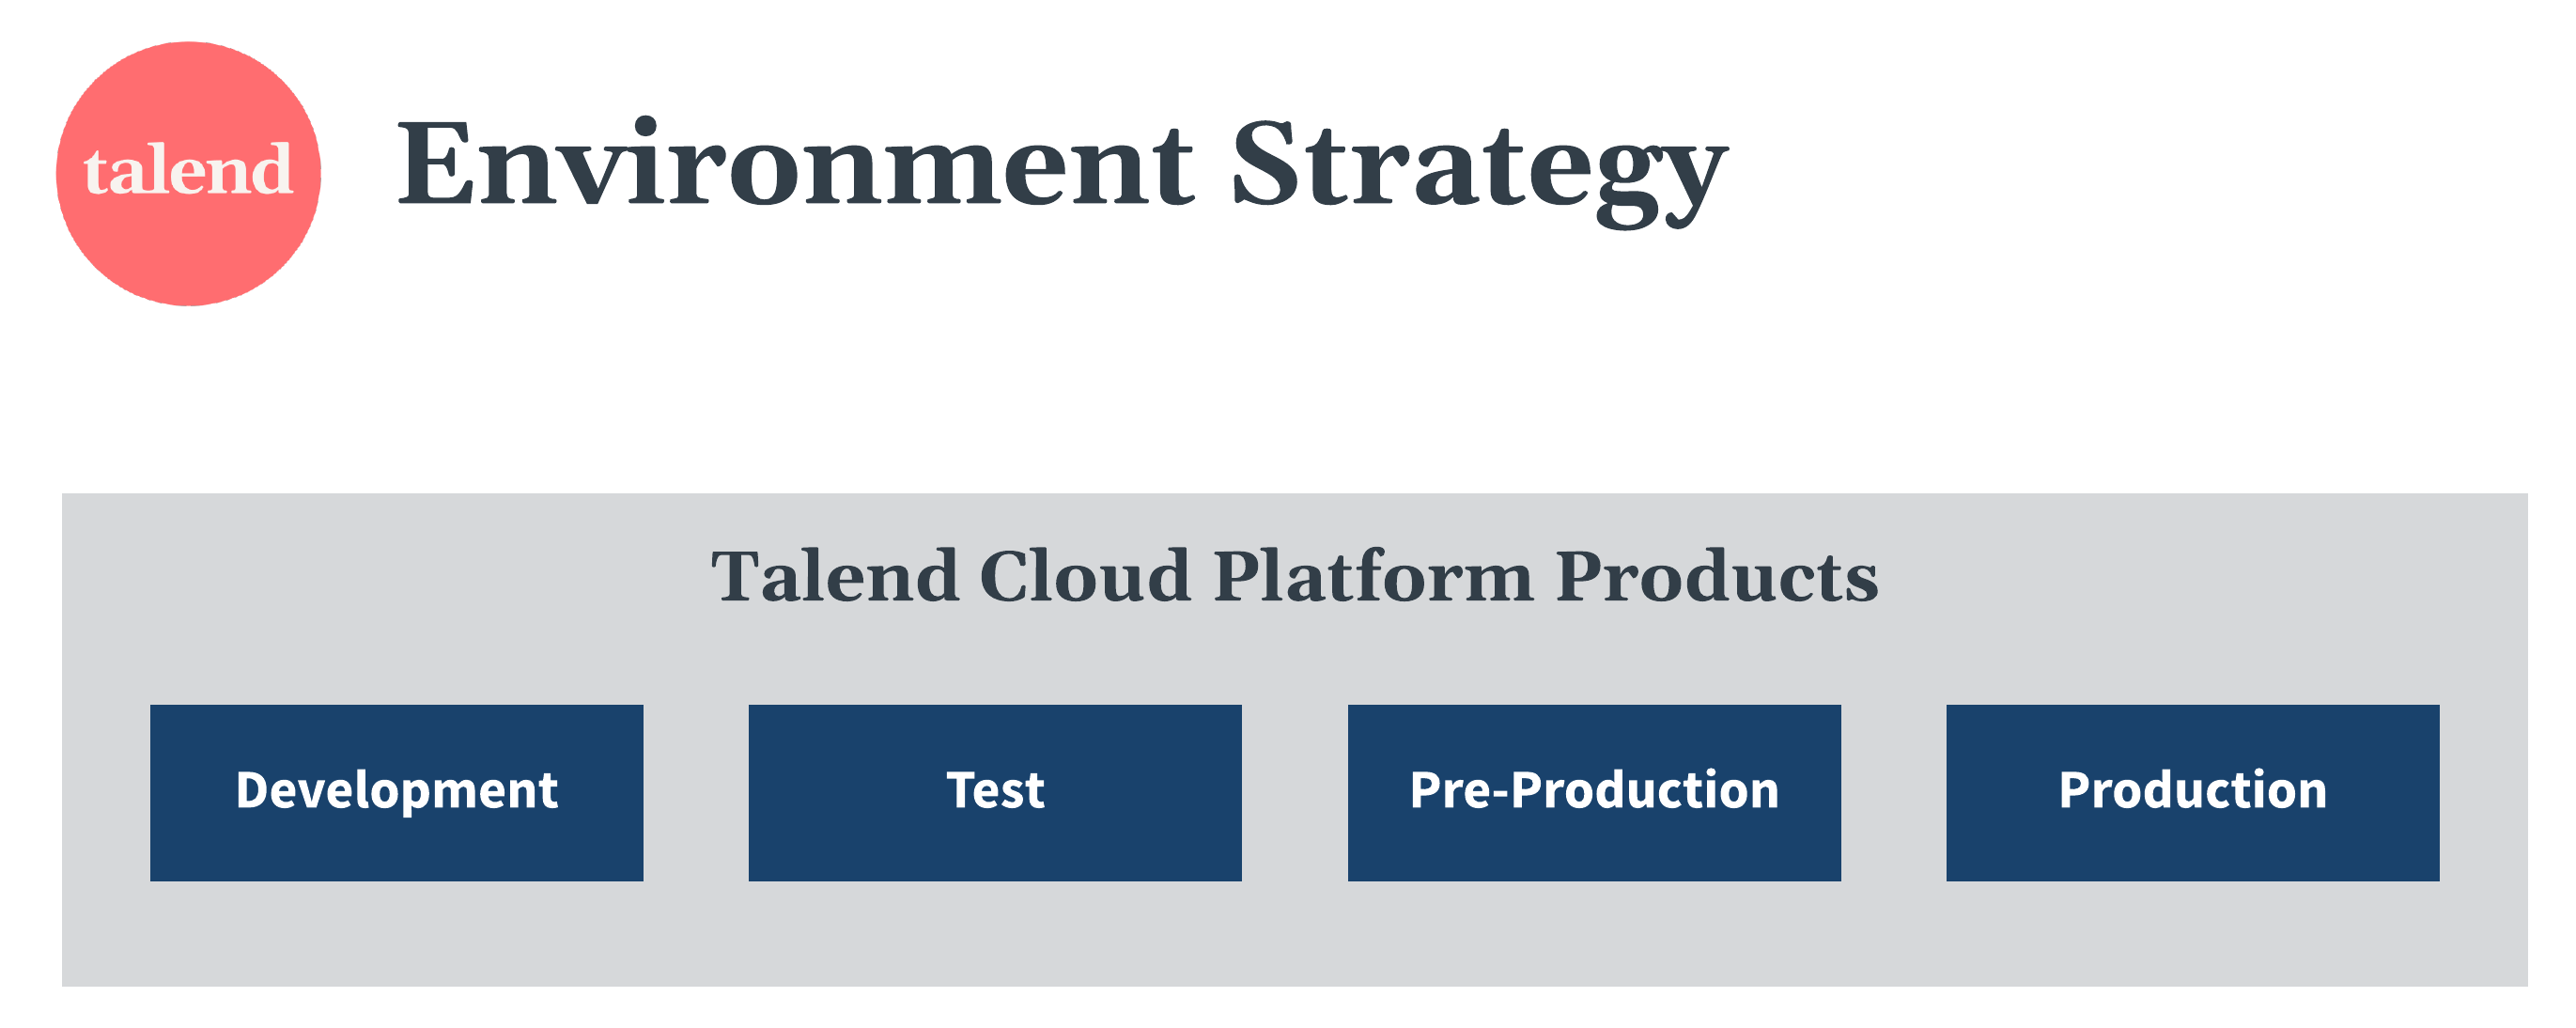 Talend Cloud Platform Products environment strategy diagram.